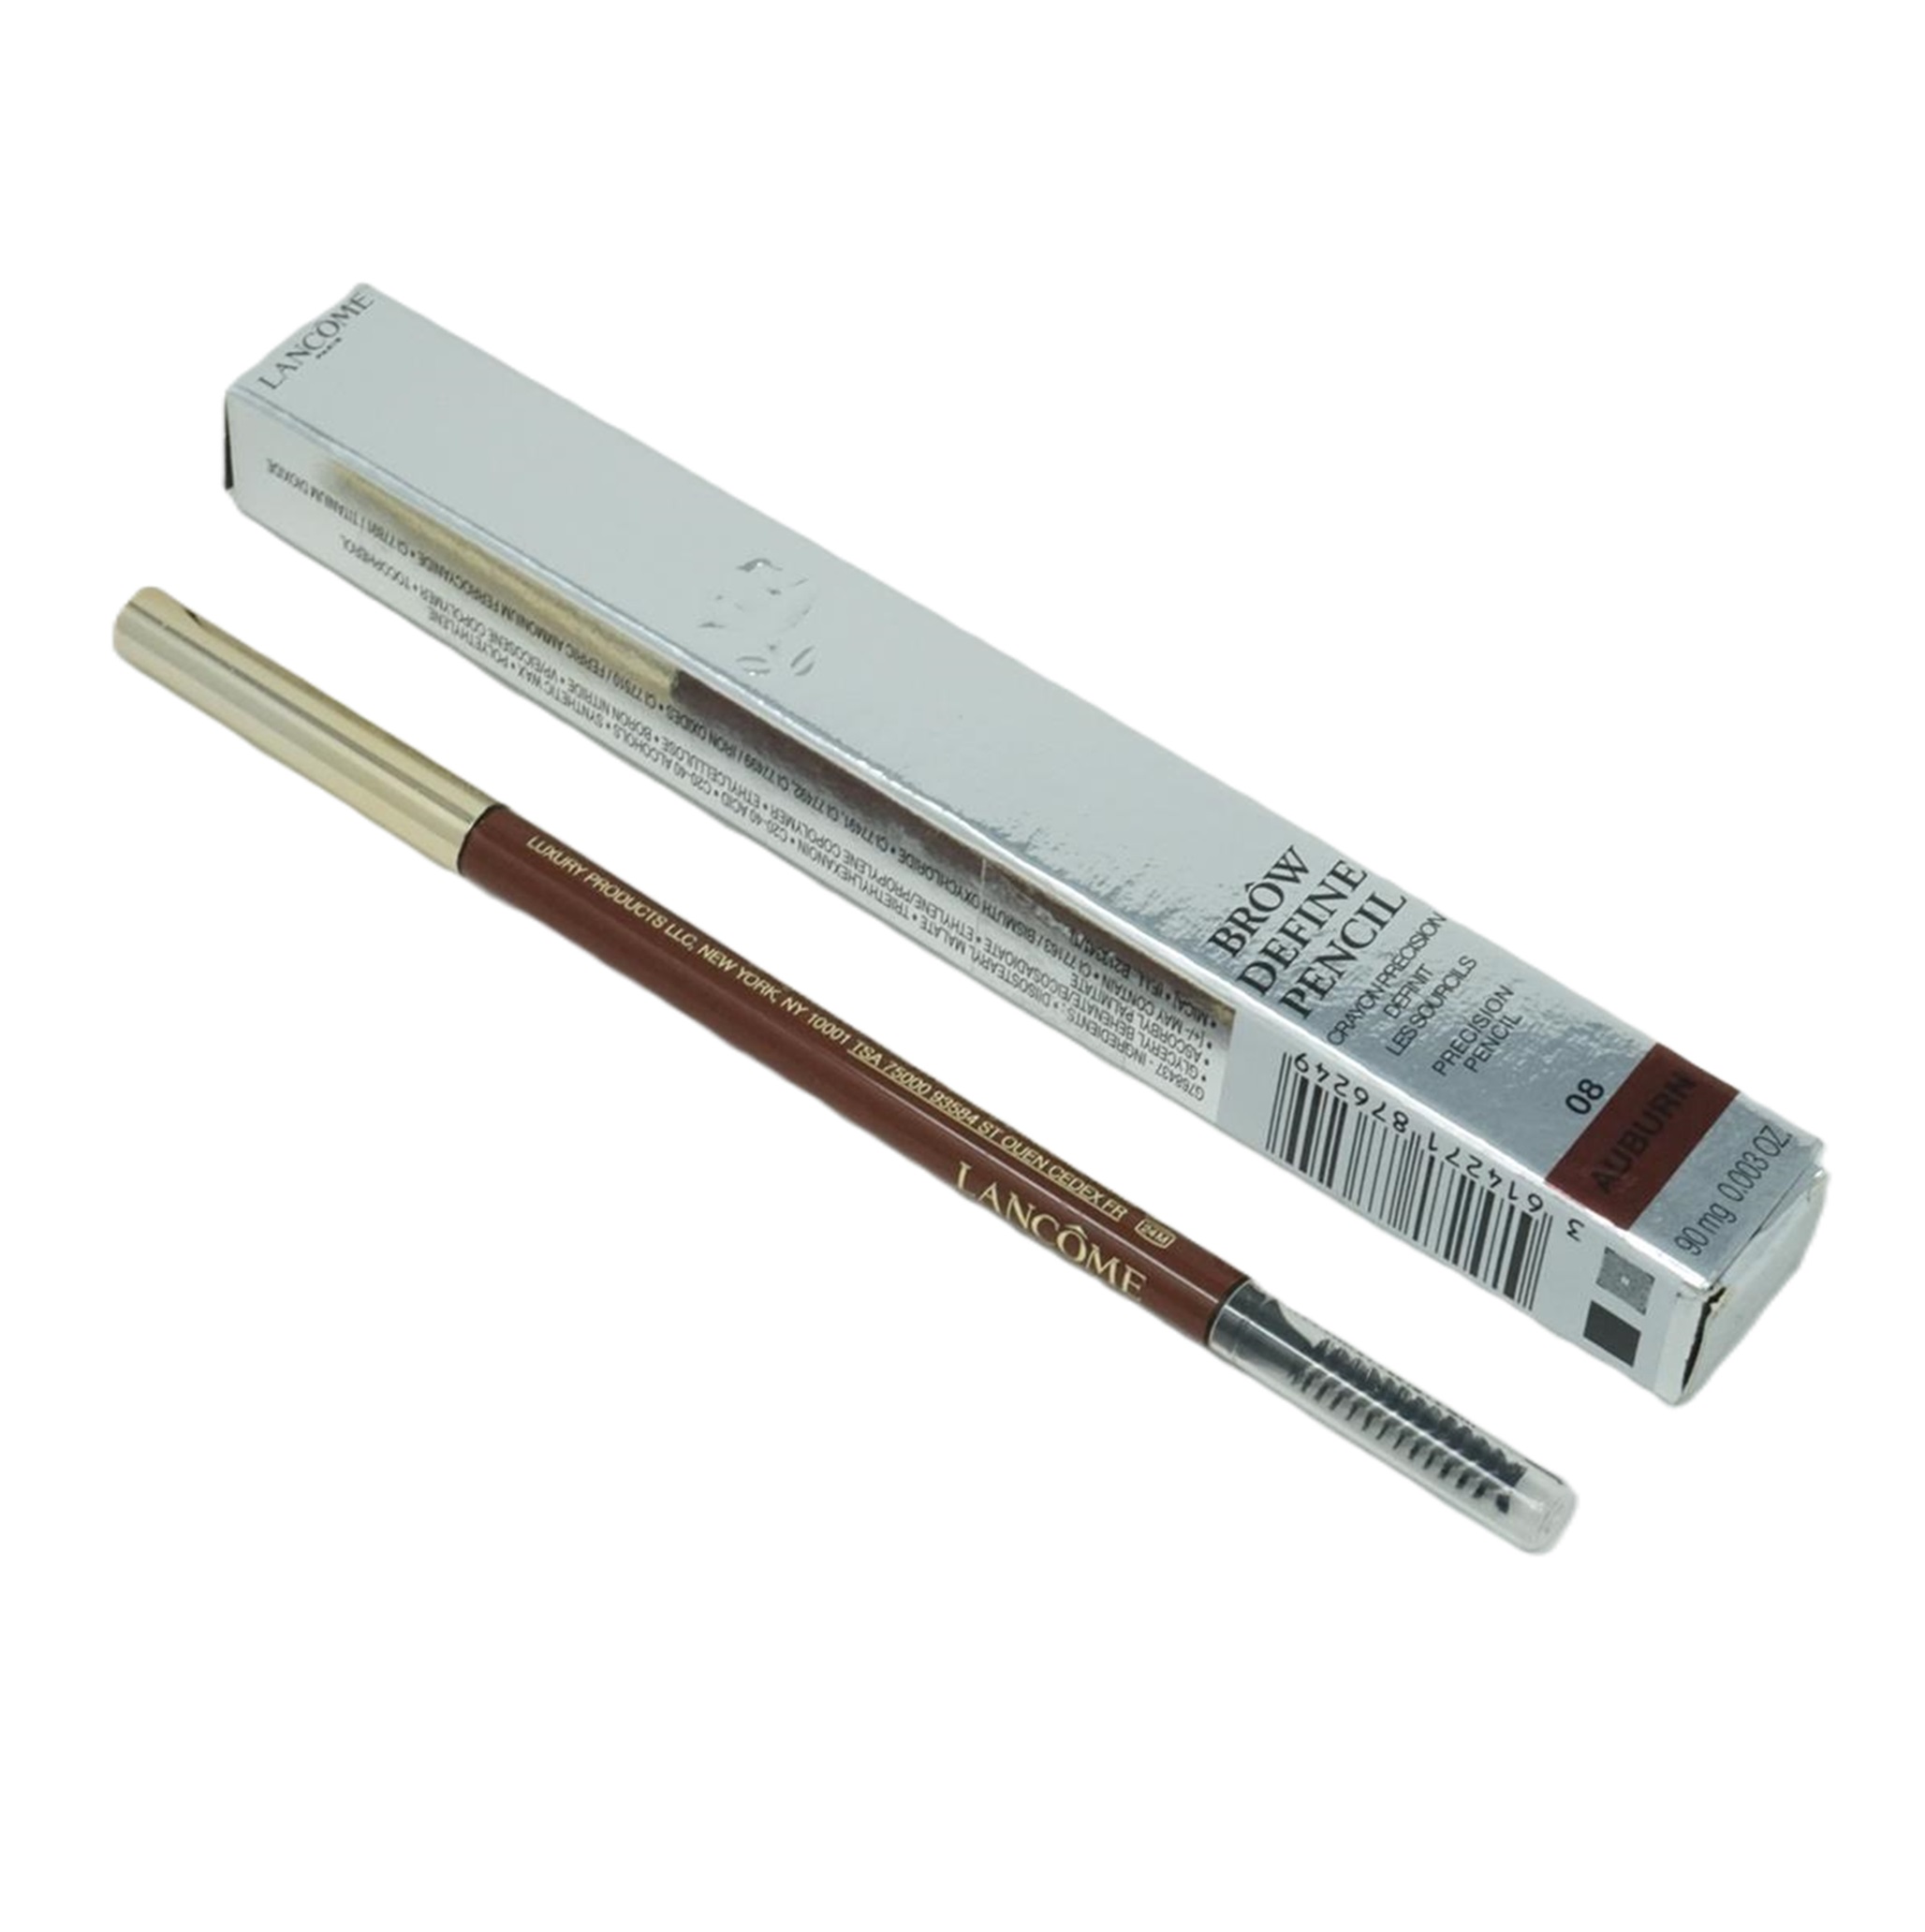 Lancome Brow Pencil Precision augenbrauenstift 08 Auburn